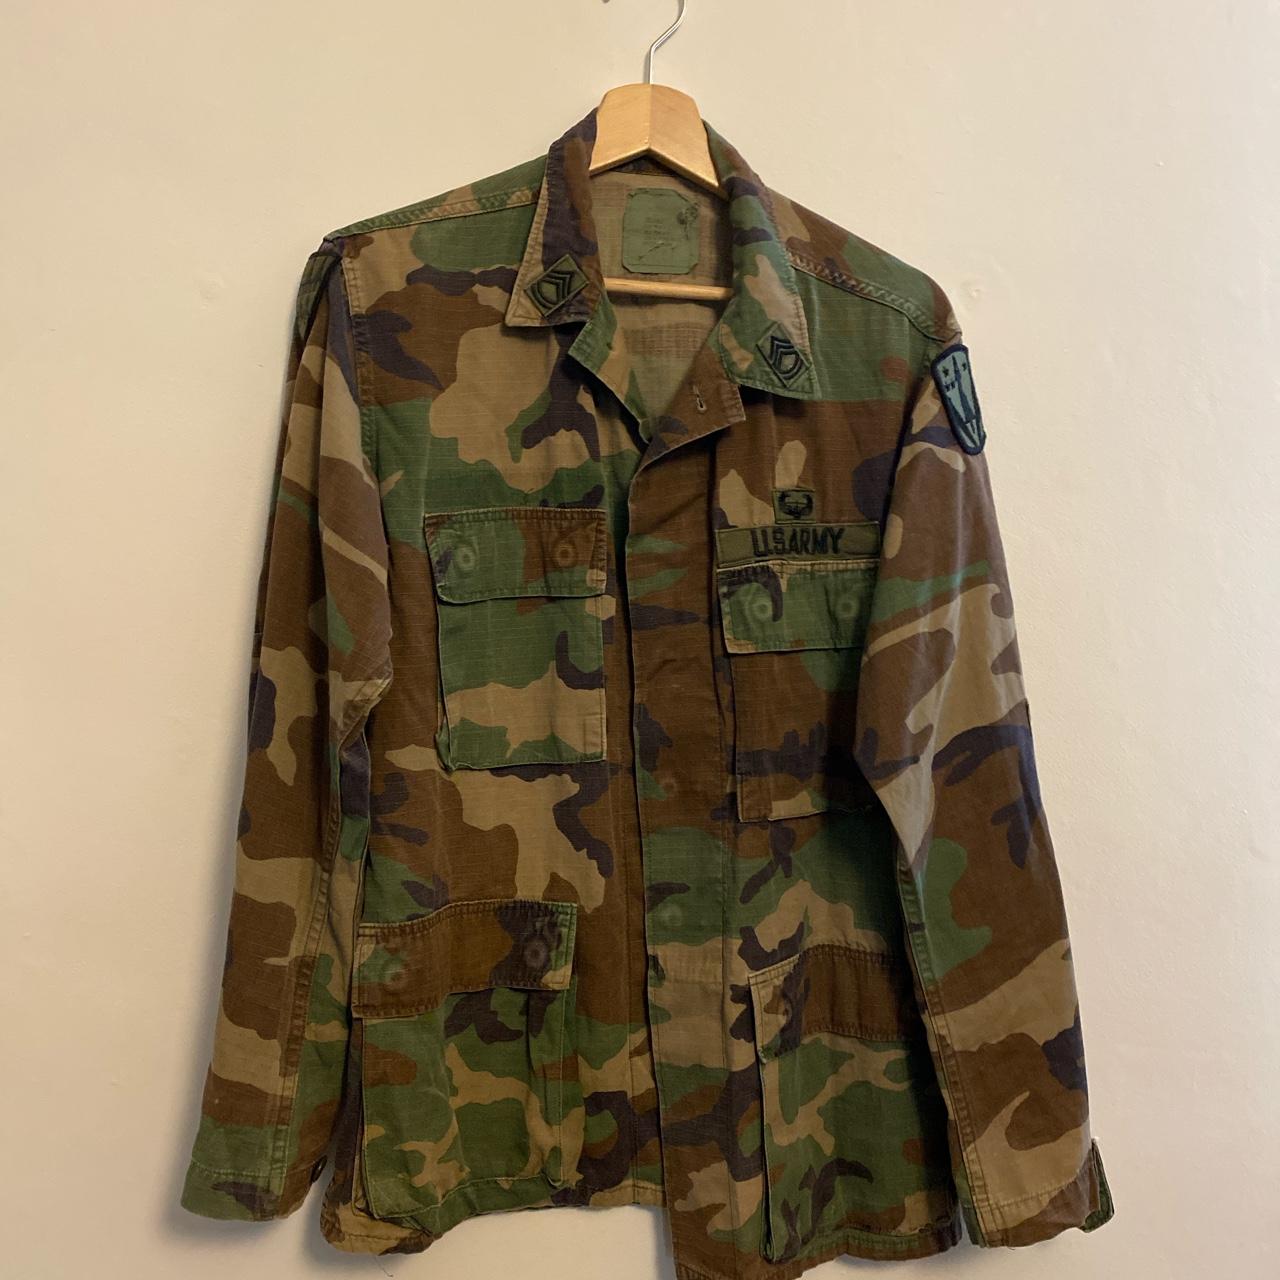 US Army military jacket size S - genuine US... - Depop